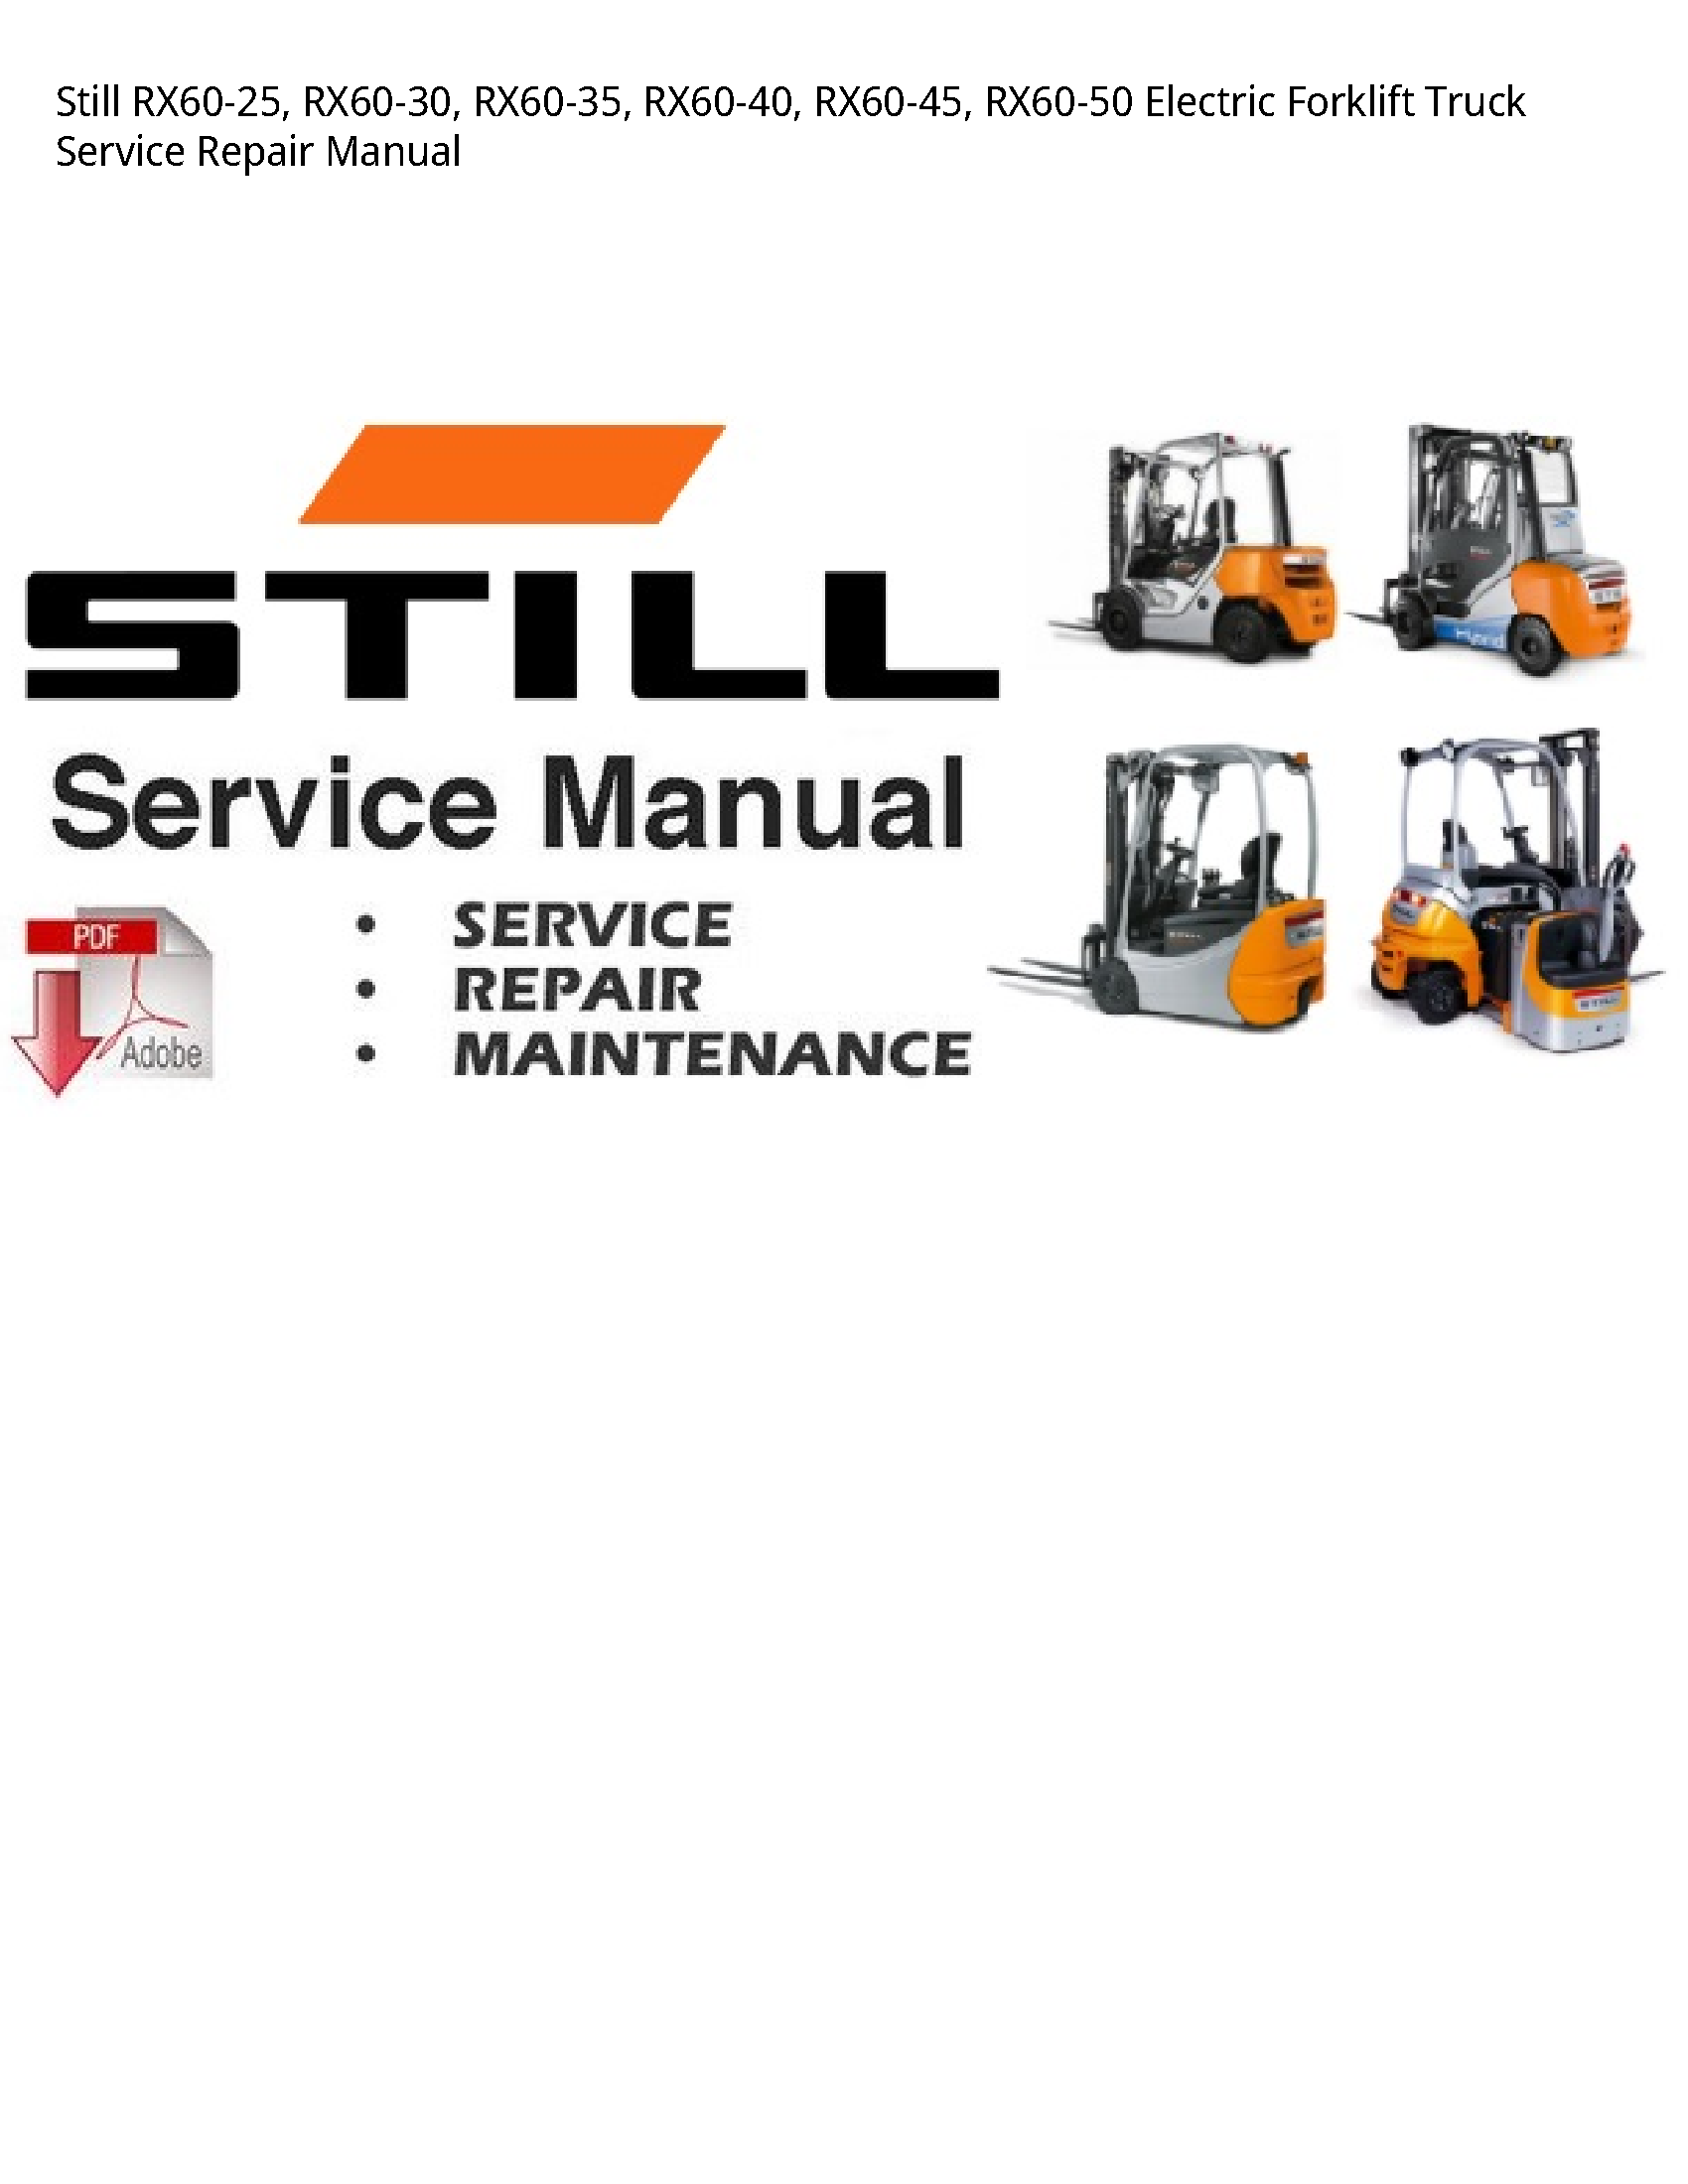 Still RX60-25 Electric Forklift Truck manual